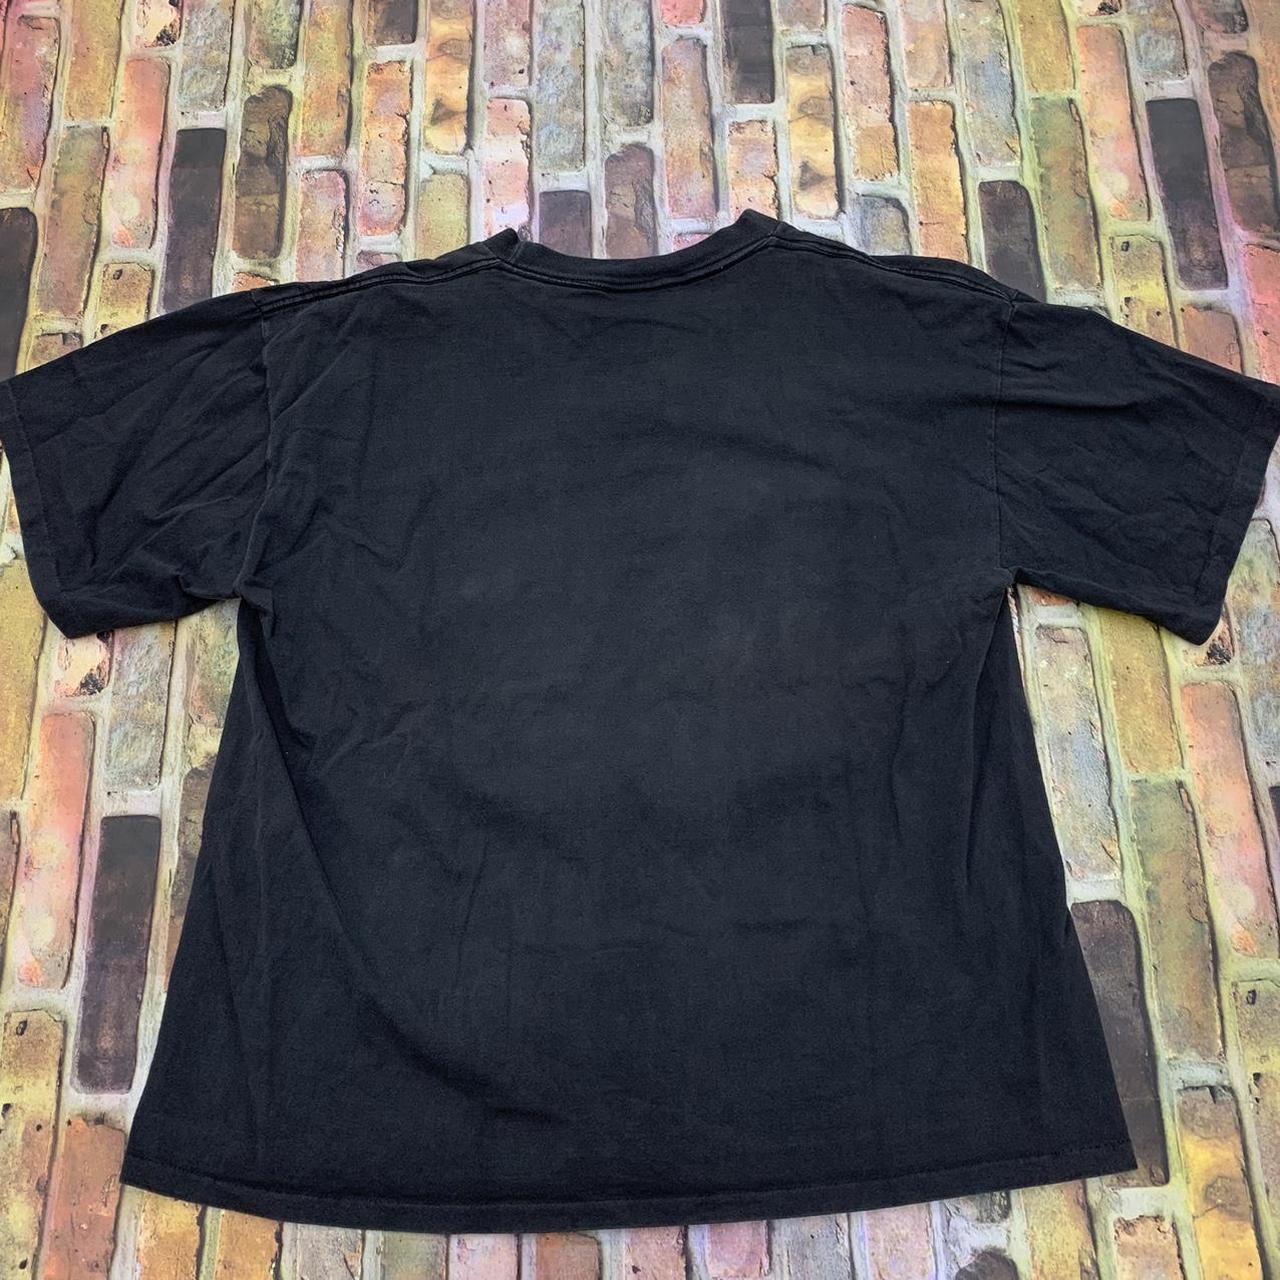 Vintage 1992 Los Angeles Raiders T-shirt Size - Depop